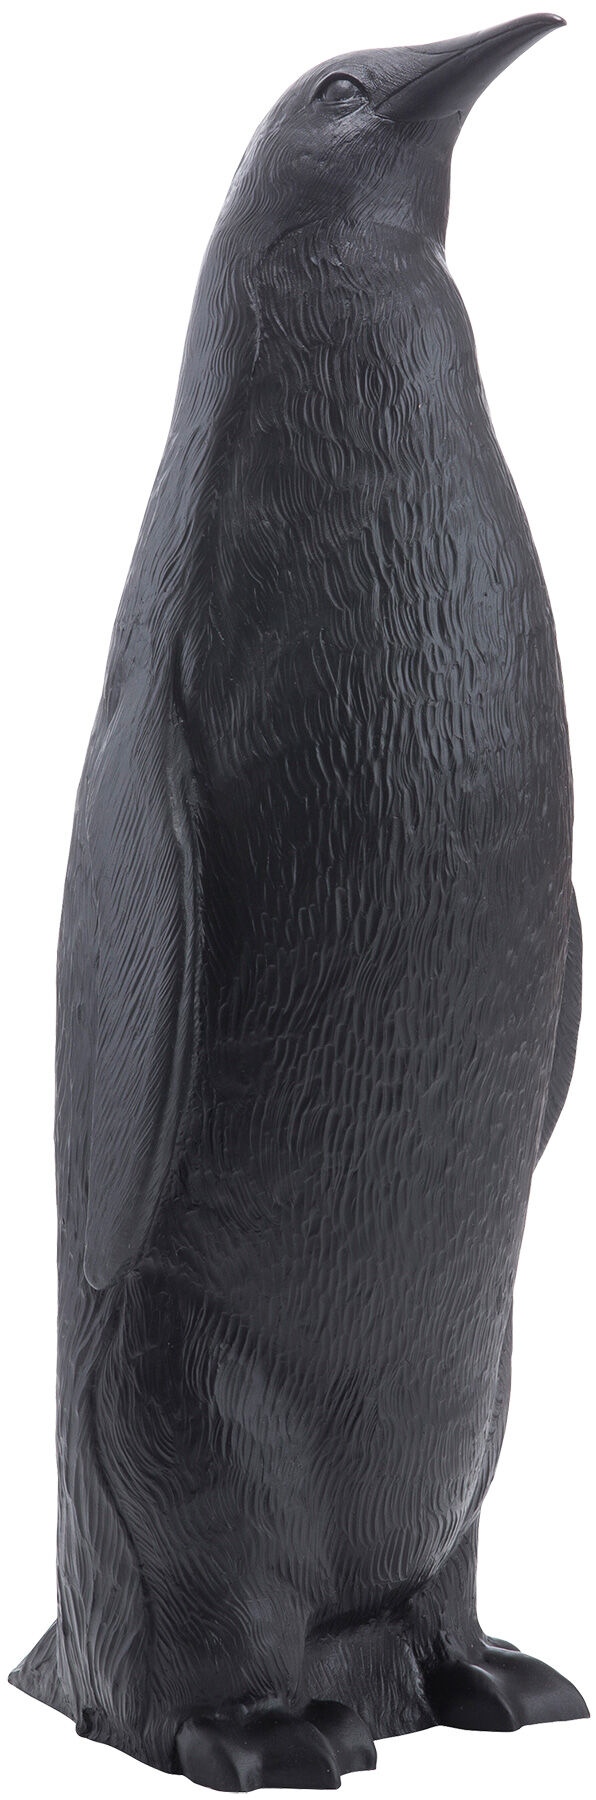 Skulptur "Penguin II Upright" (2006), sort version von Ottmar Hörl